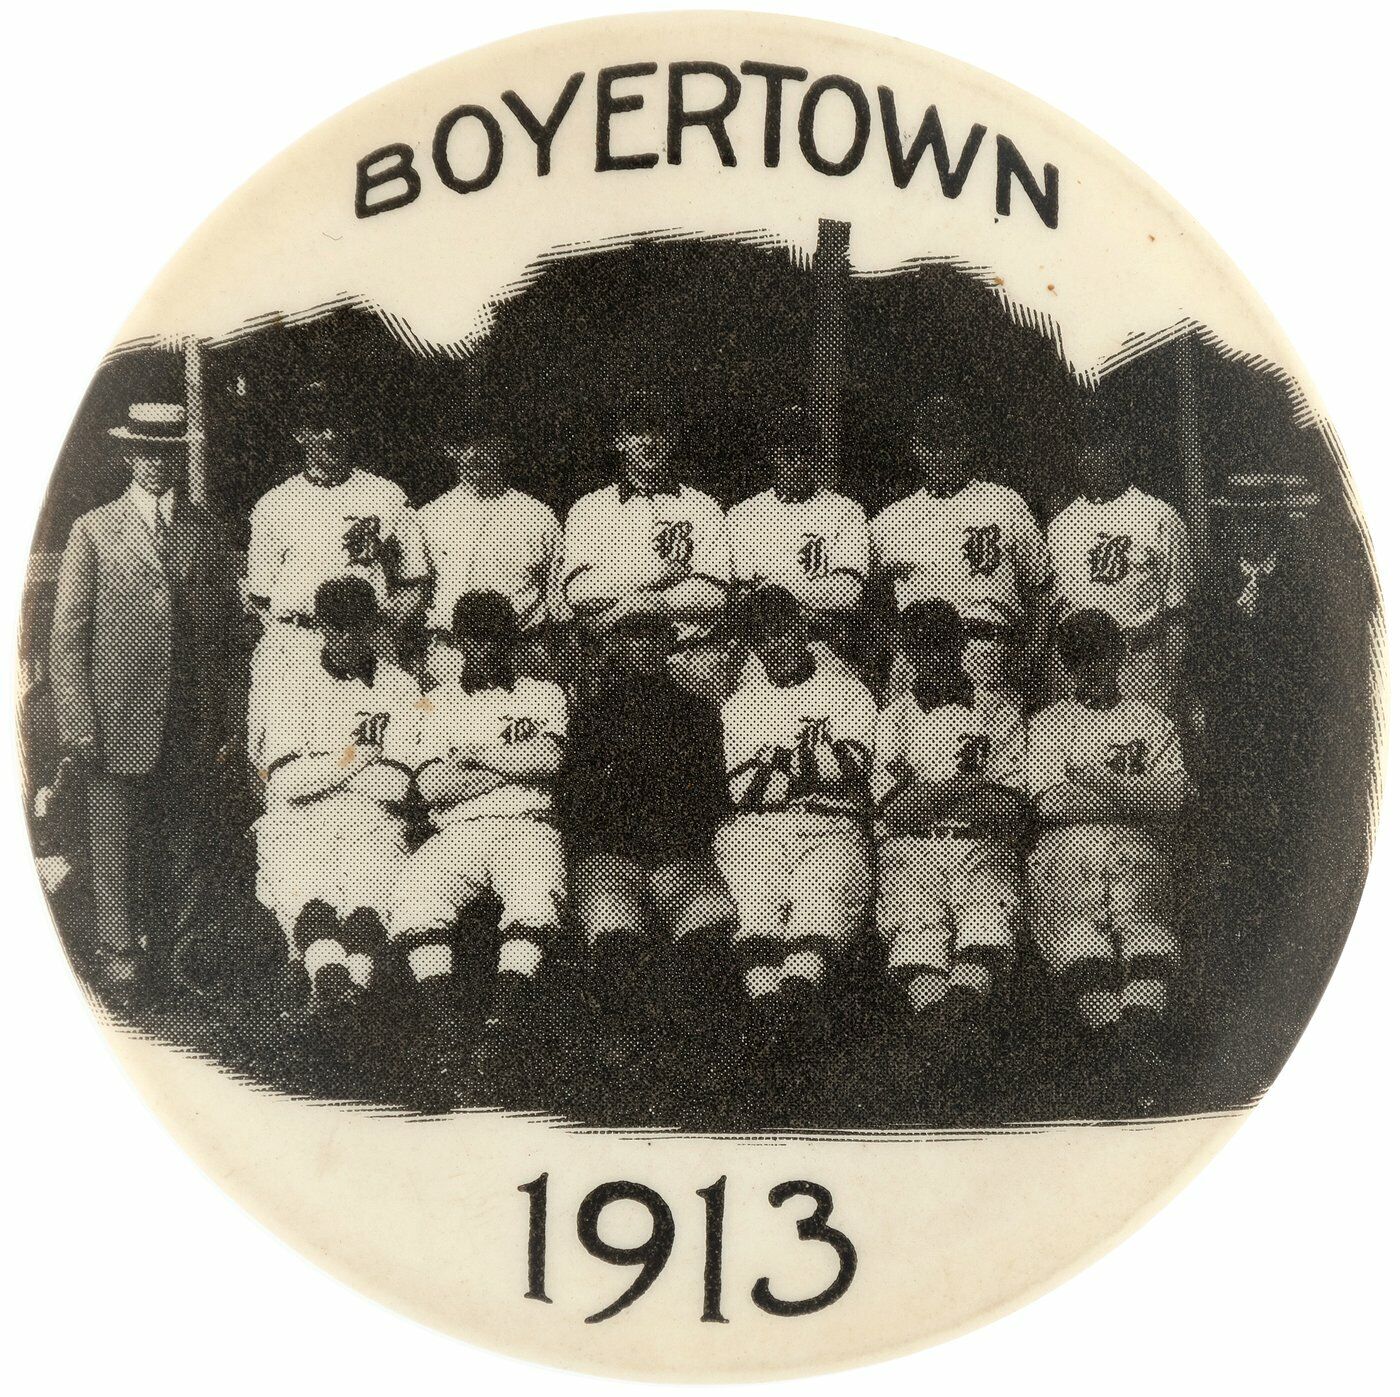 RARE 1913 BOYERTOWN PENNSYLVANIA AMATUER BASEBALL CLUB POCKET MIRROR BUTTON PIN